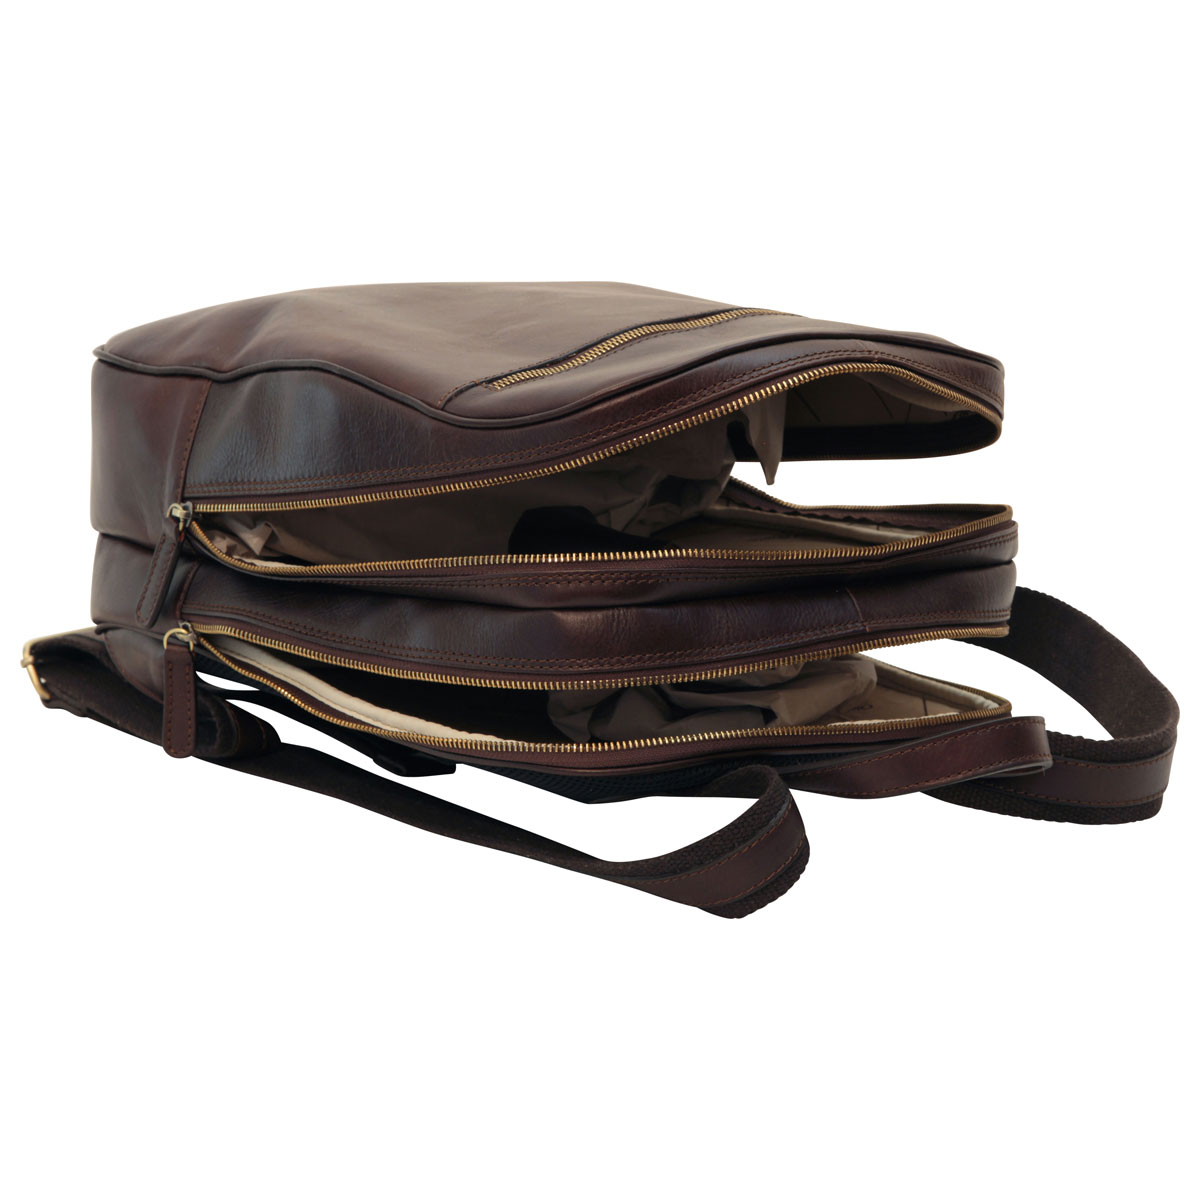 Leather backpack with exterior zip pockets - Dark Brown | 408089TM UK | Old Angler Firenze